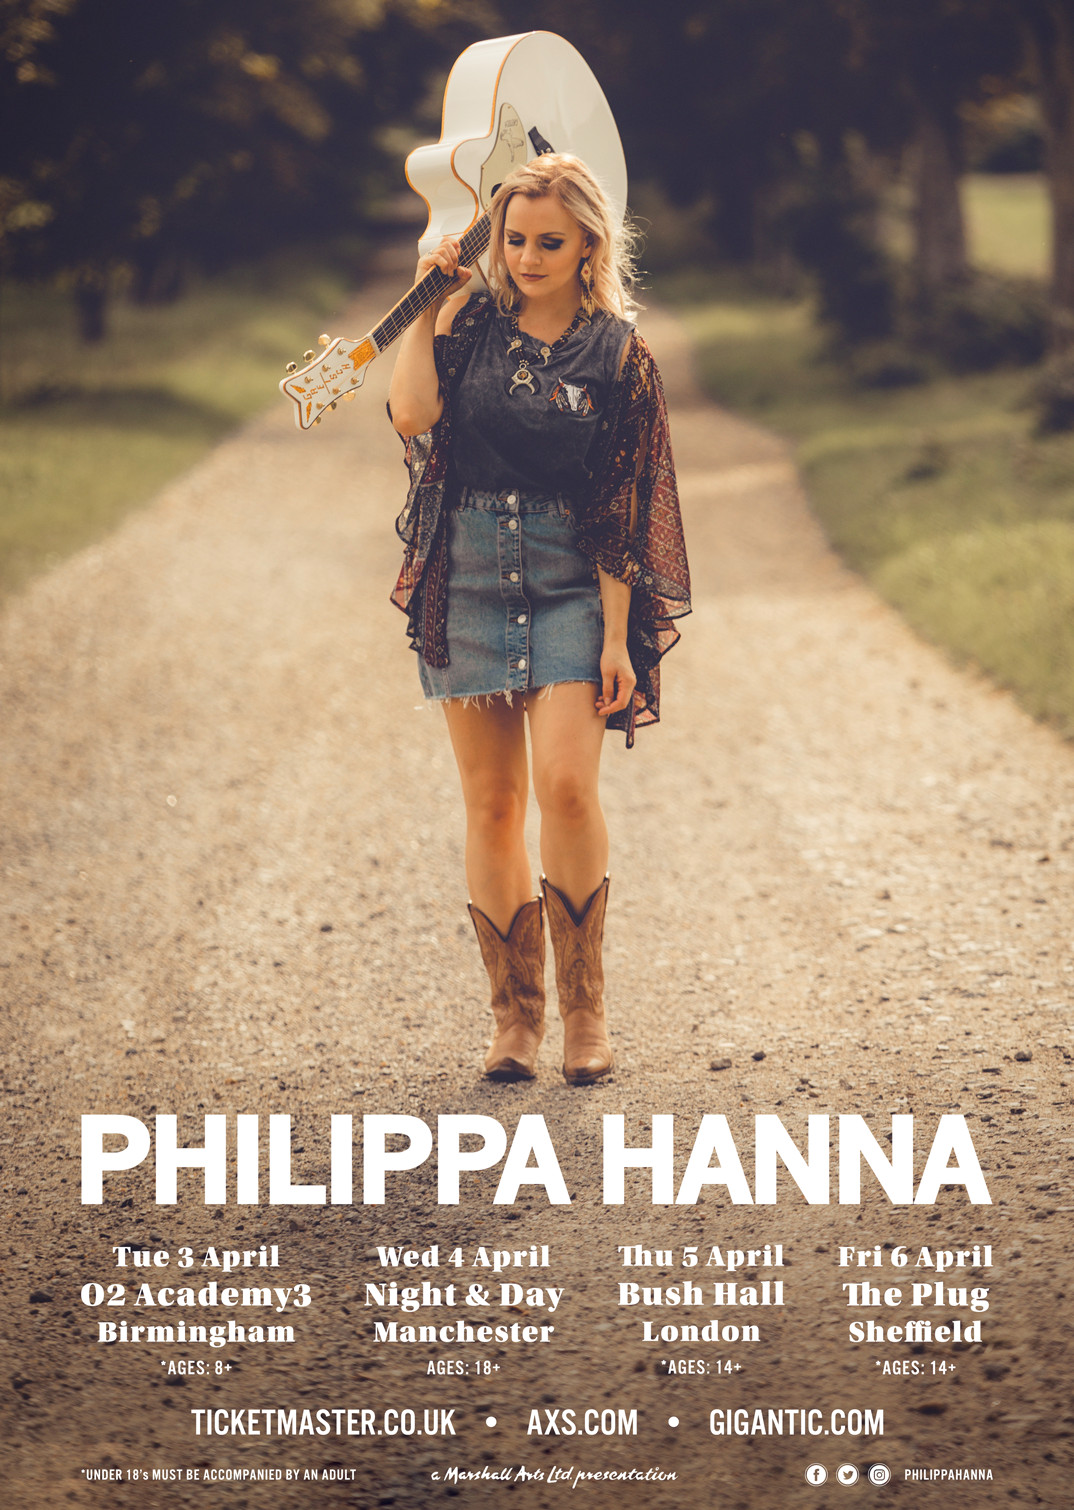 Philippa Hanna Announces 4-Date UK Tour This April